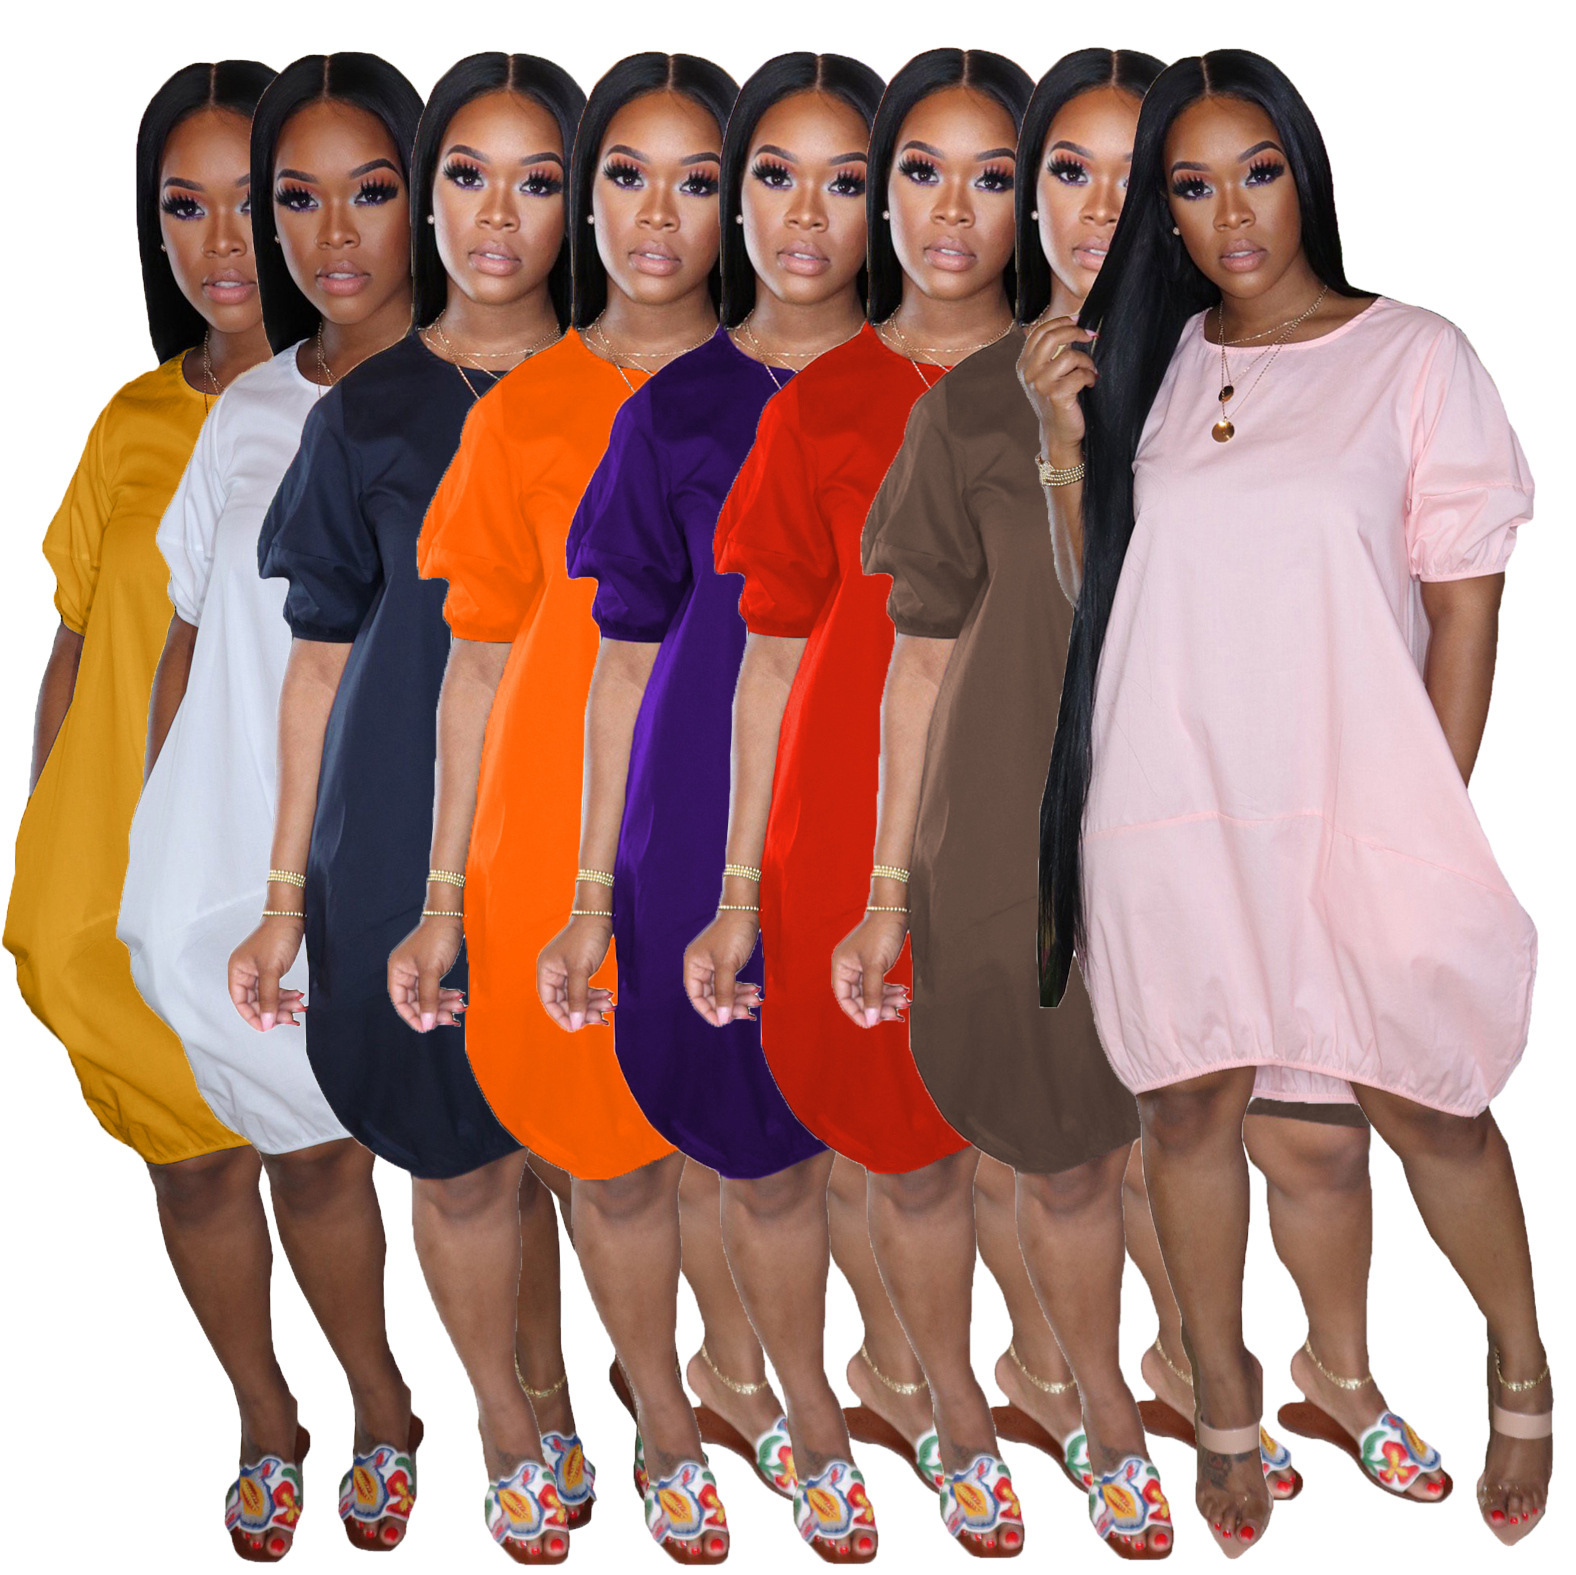 

Summer Women Dresses Fashion Bubble Large Size T-shirt Lantern Skirt Short Sleeve Homewear Pullover Comfortable Clubwear -2XL, Orange 0